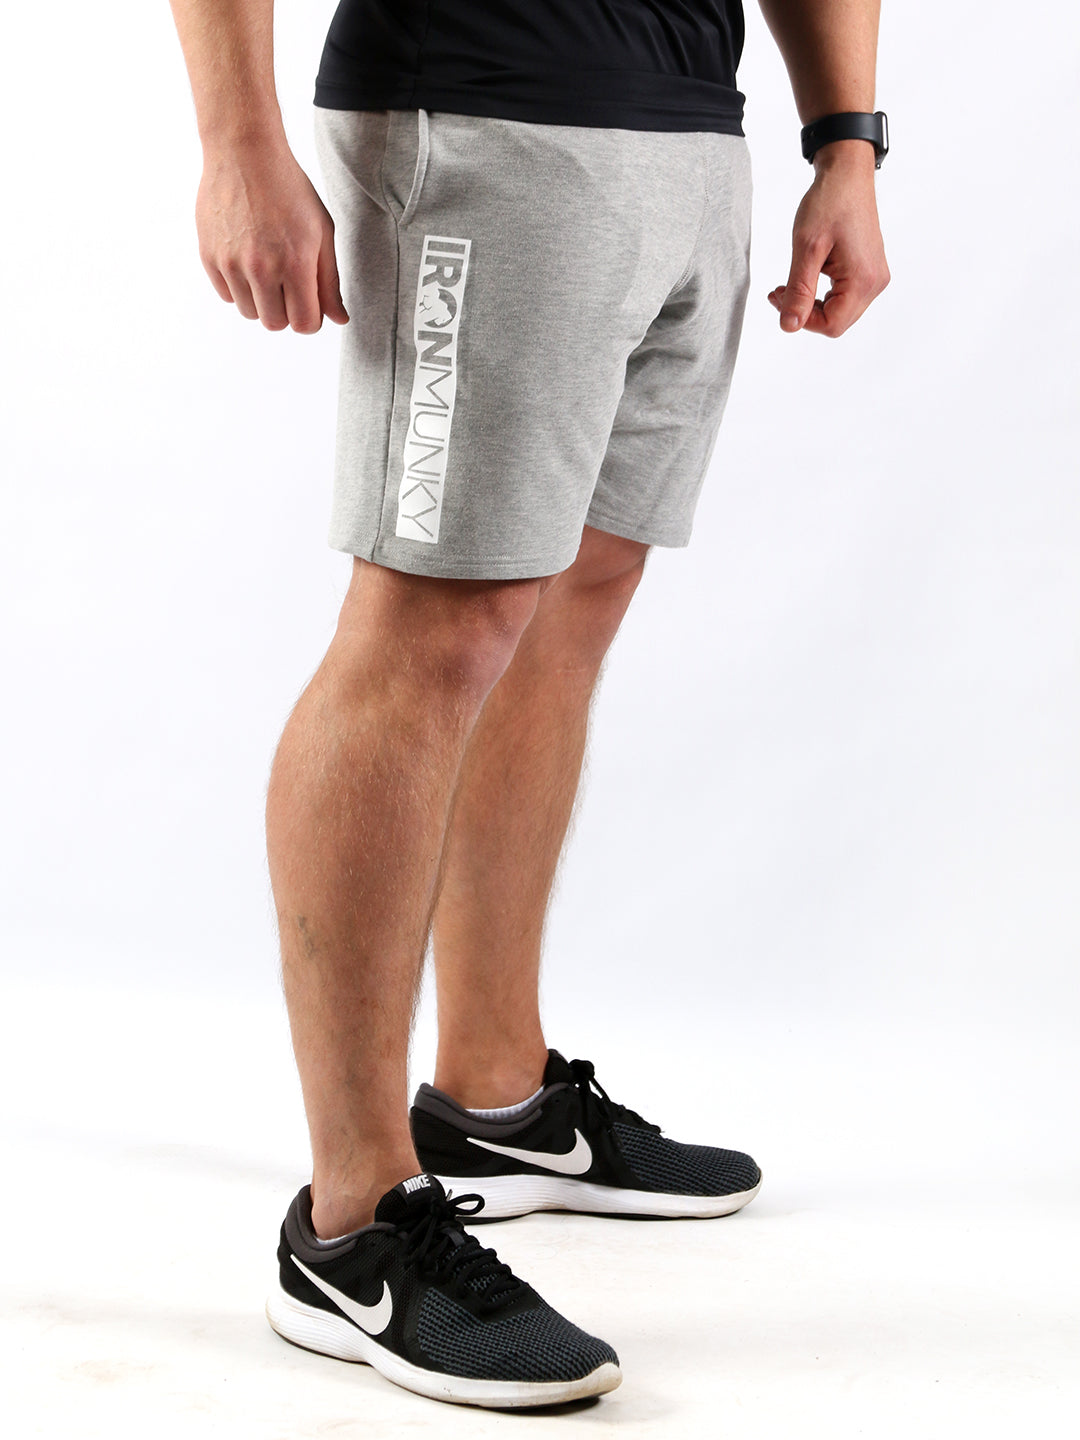 Flow Fit Shorts - Grey